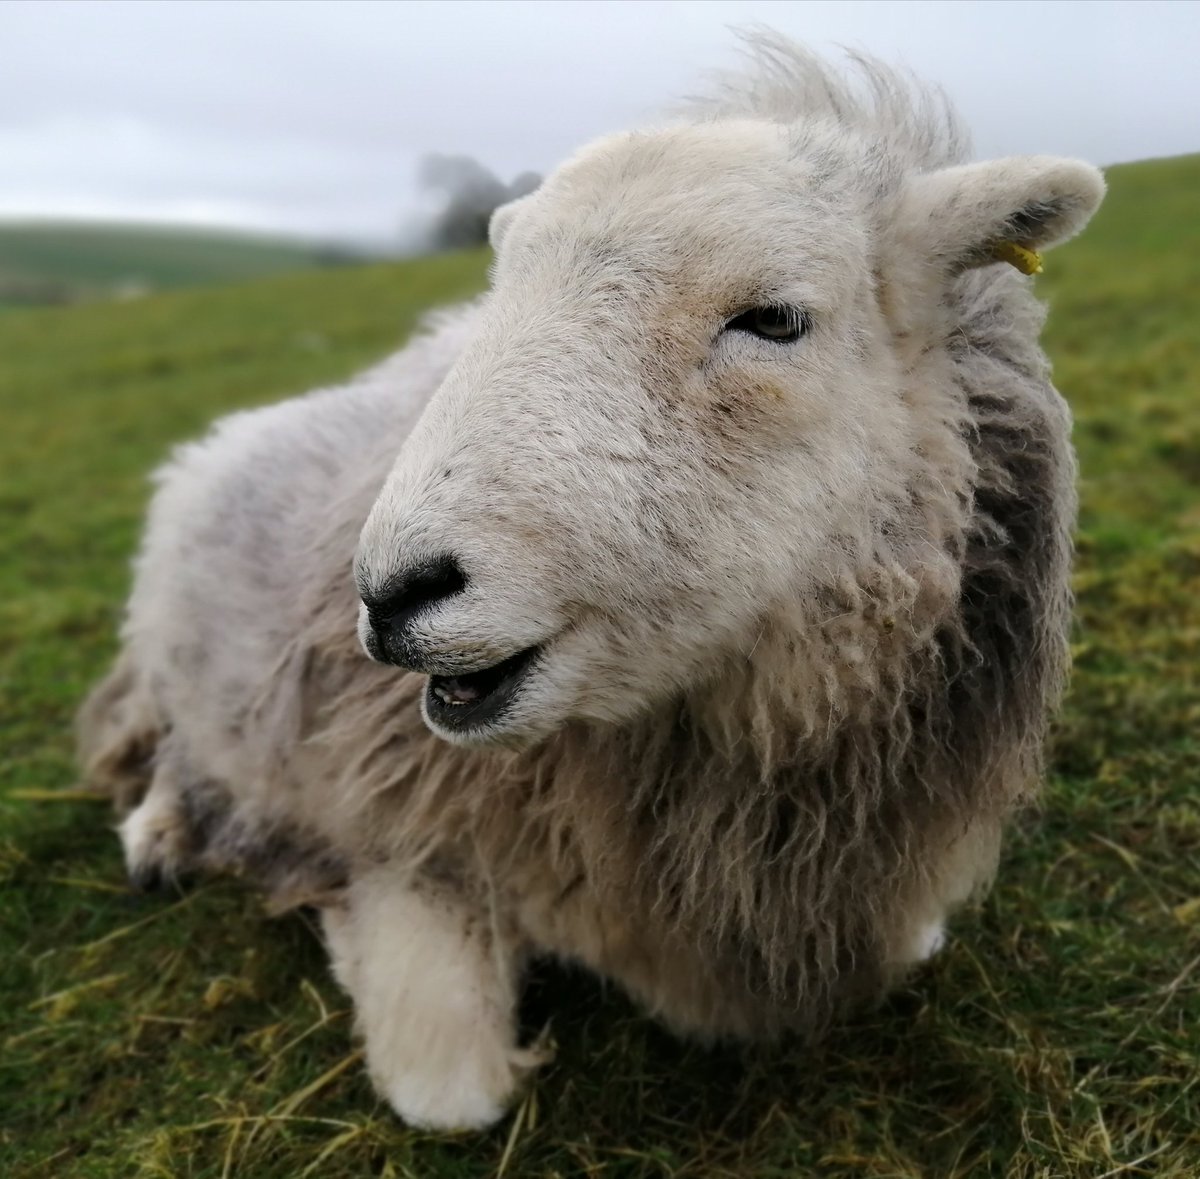 Hetty & her bump 💚💚
#herdwicks #sheep #hillfarm #peakdistrict #Staffordshiremoorlands #lambing2023